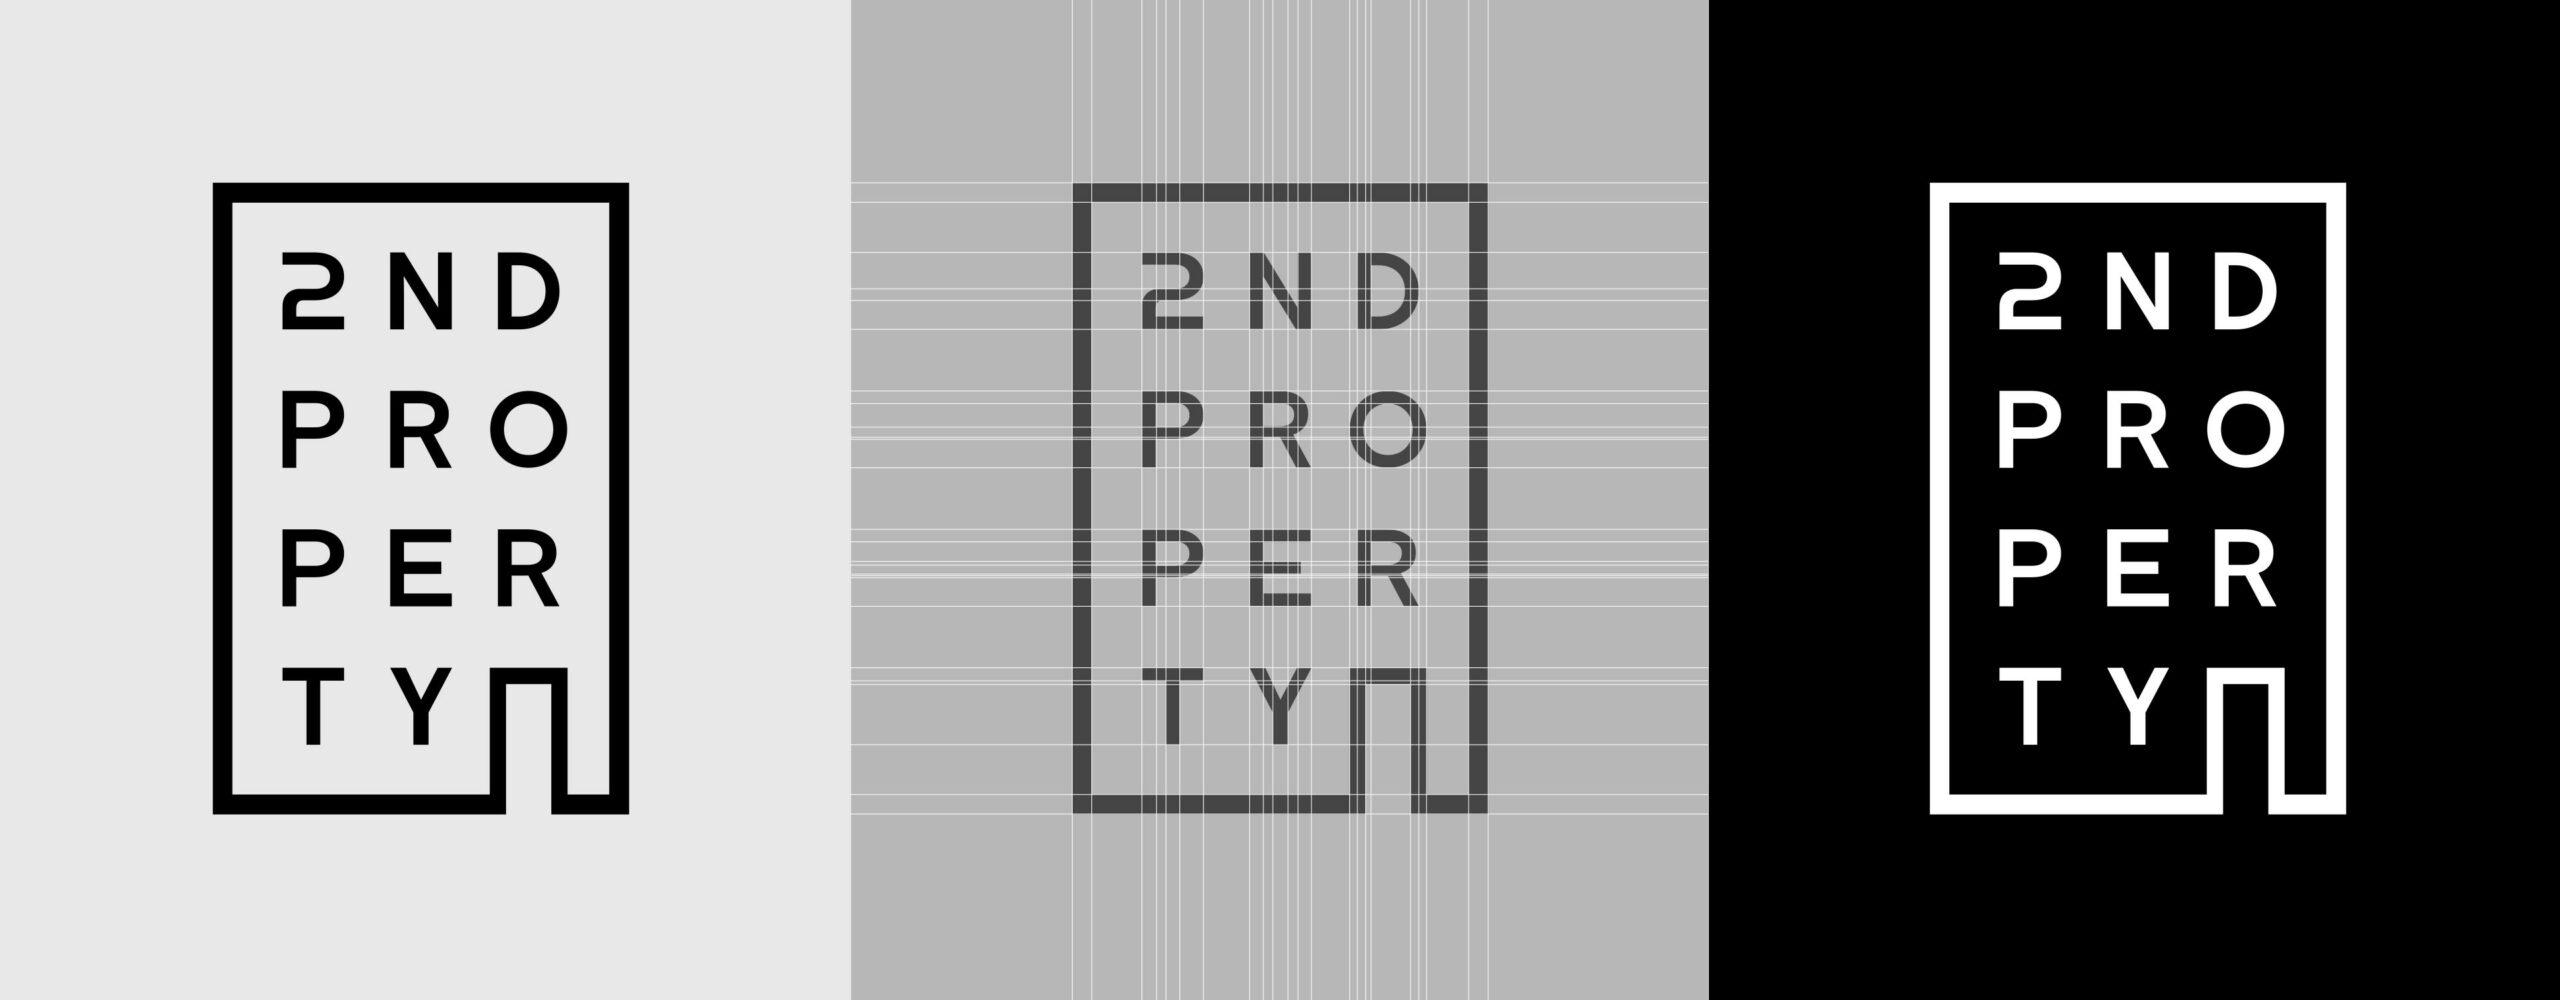 2nd Property Logo Concept